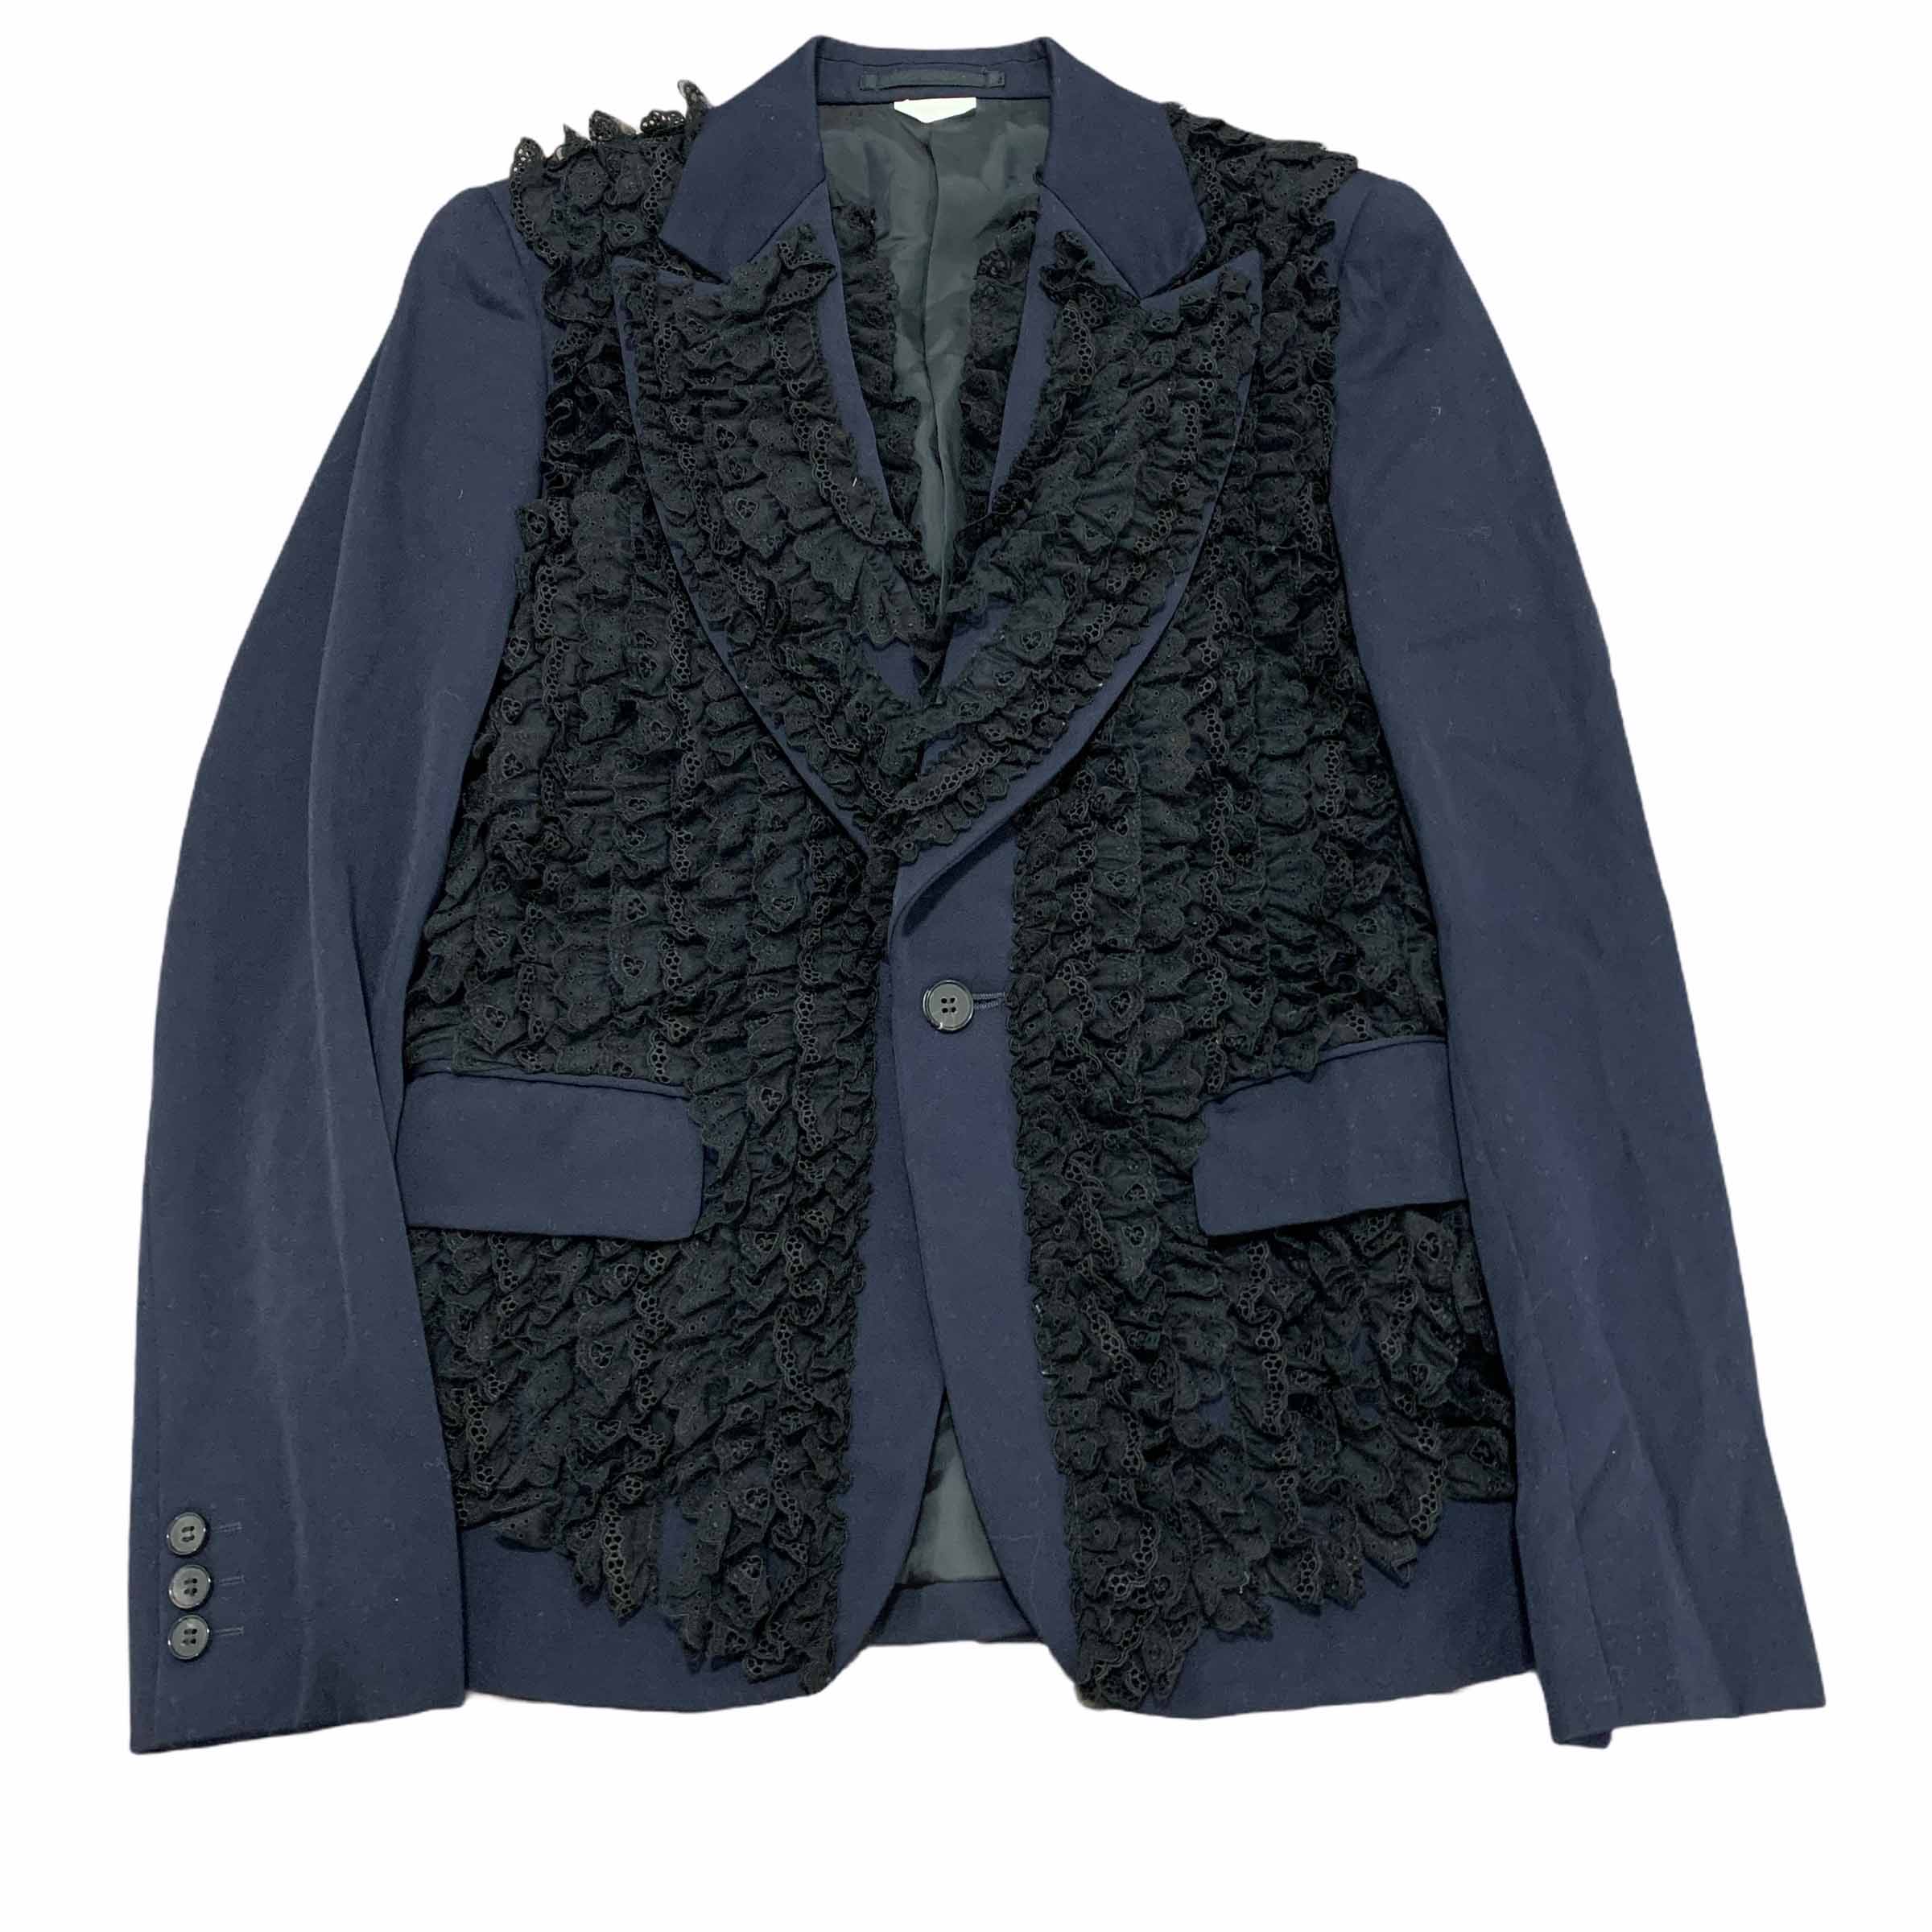 [Comme des garcons] Lace blazer jacket NY - Size XS